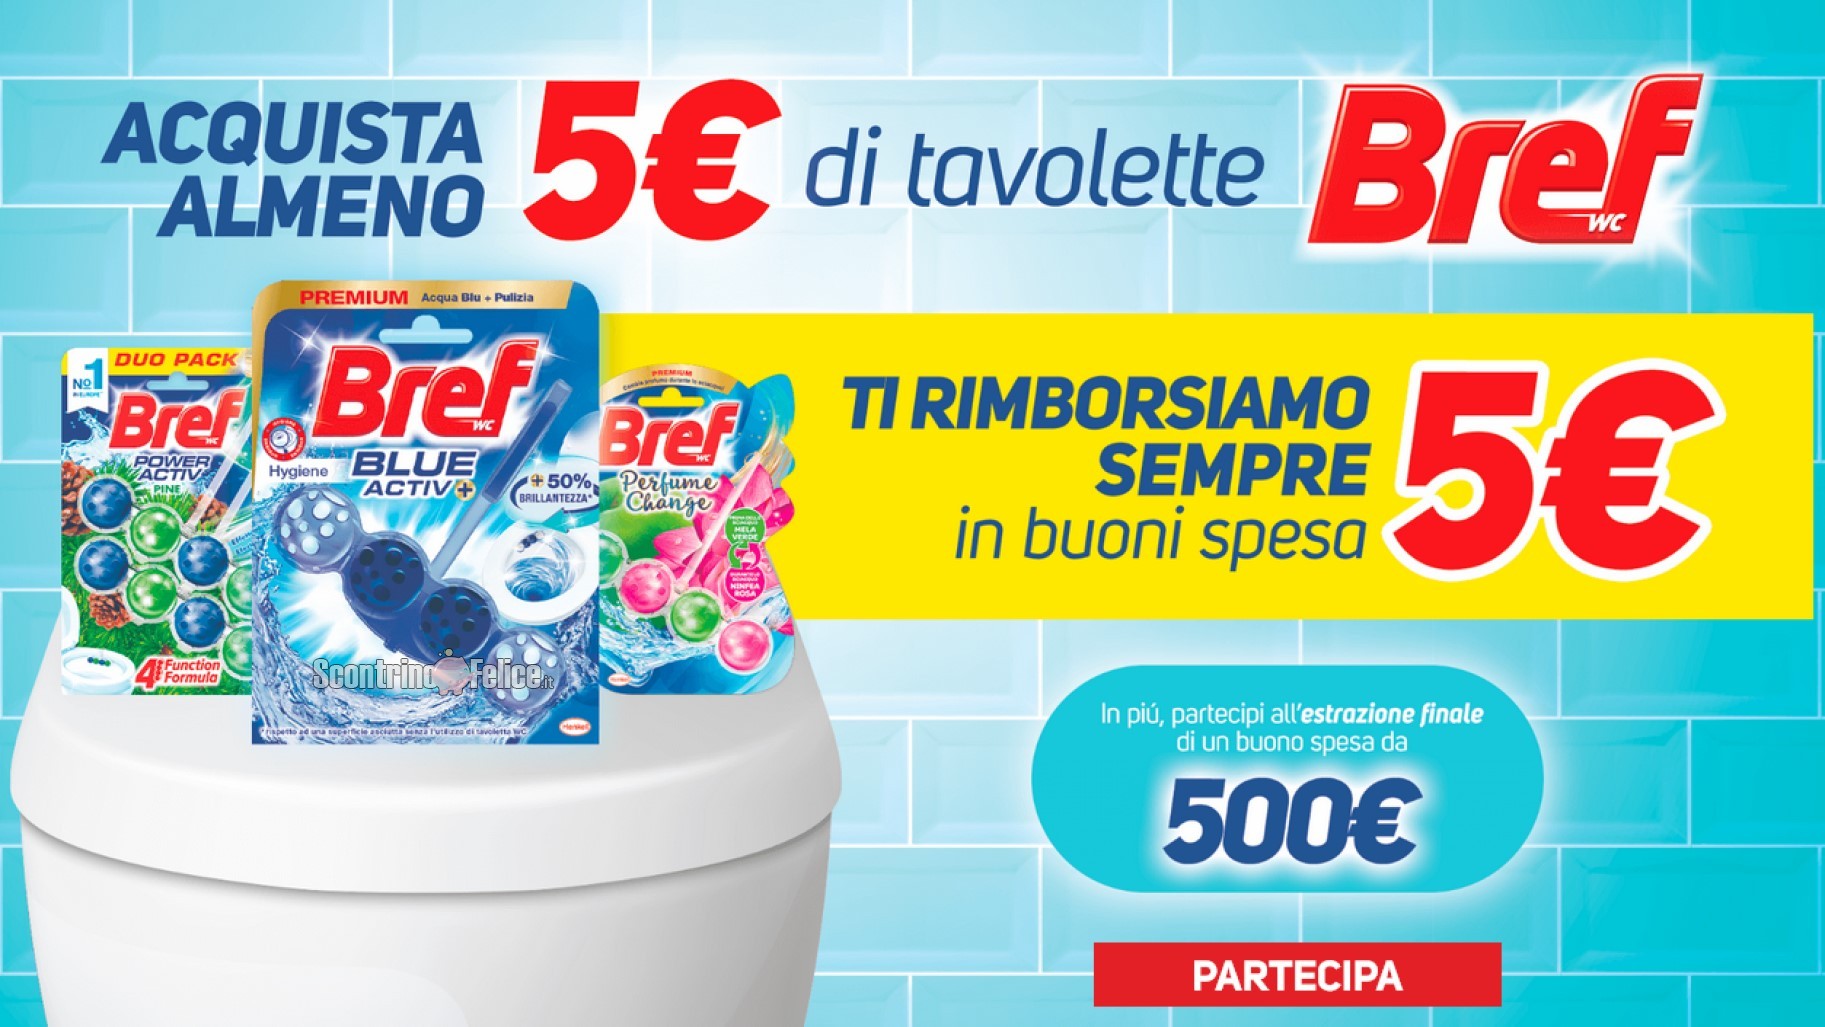 Bref Wc Tavolette ricevi un buono spesa da 5 euro e vinci Carnet di buoni spesa da 500 euro